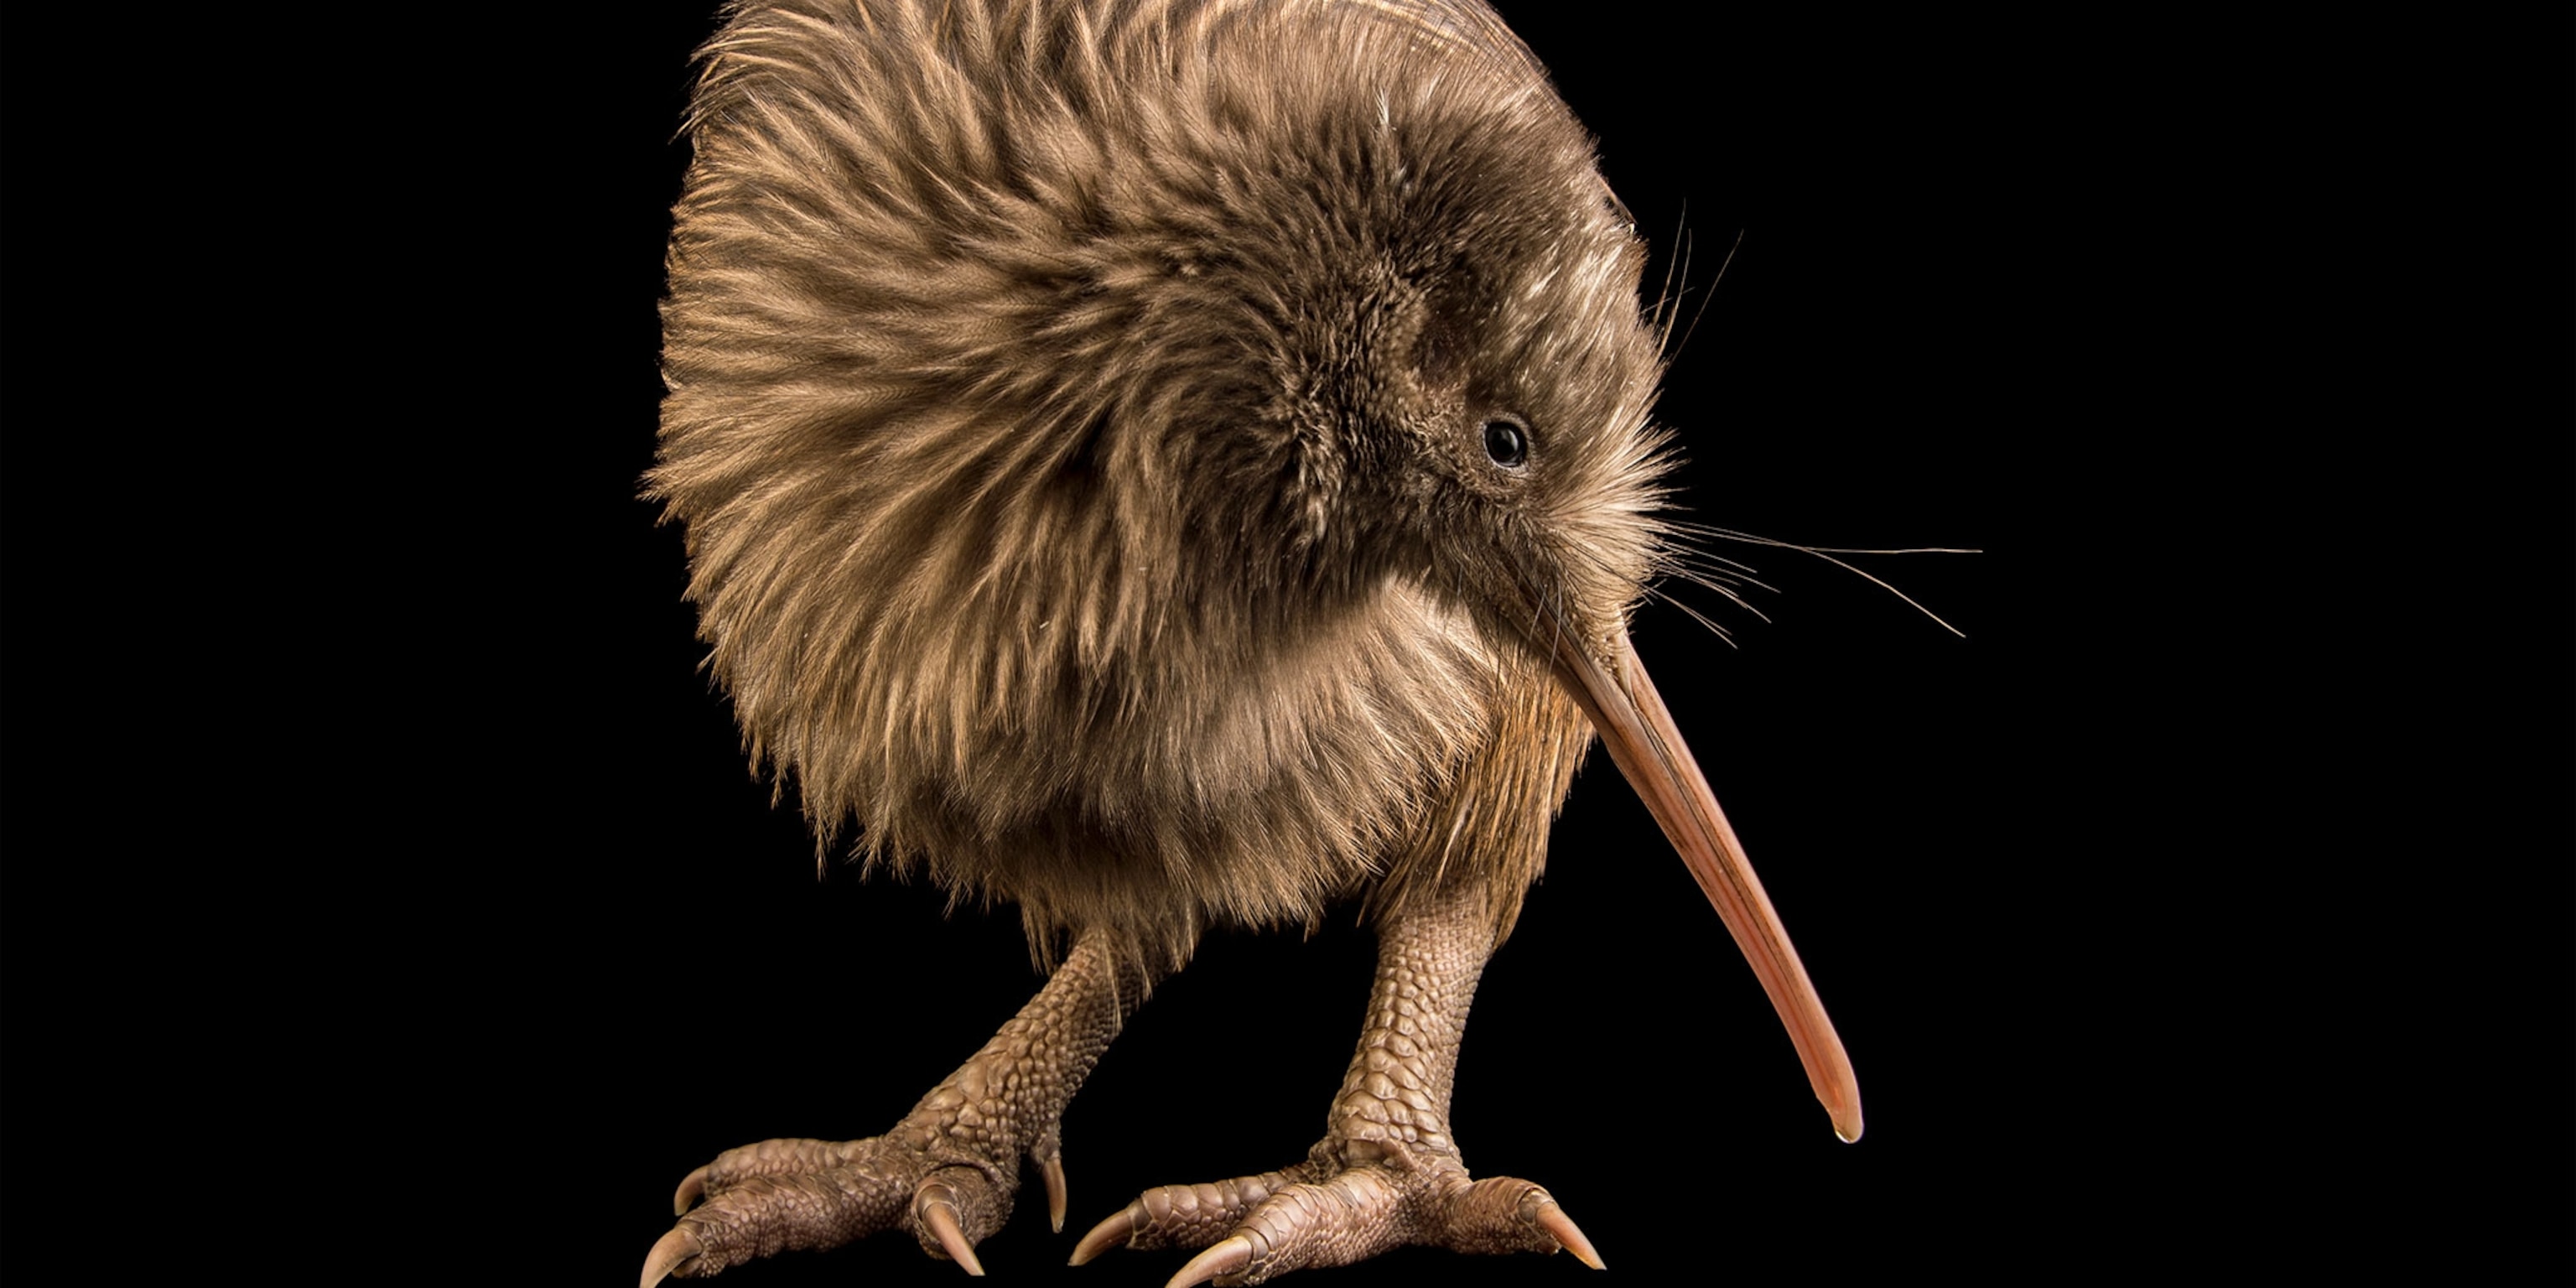 Detail Images Of A Kiwi Bird Nomer 18